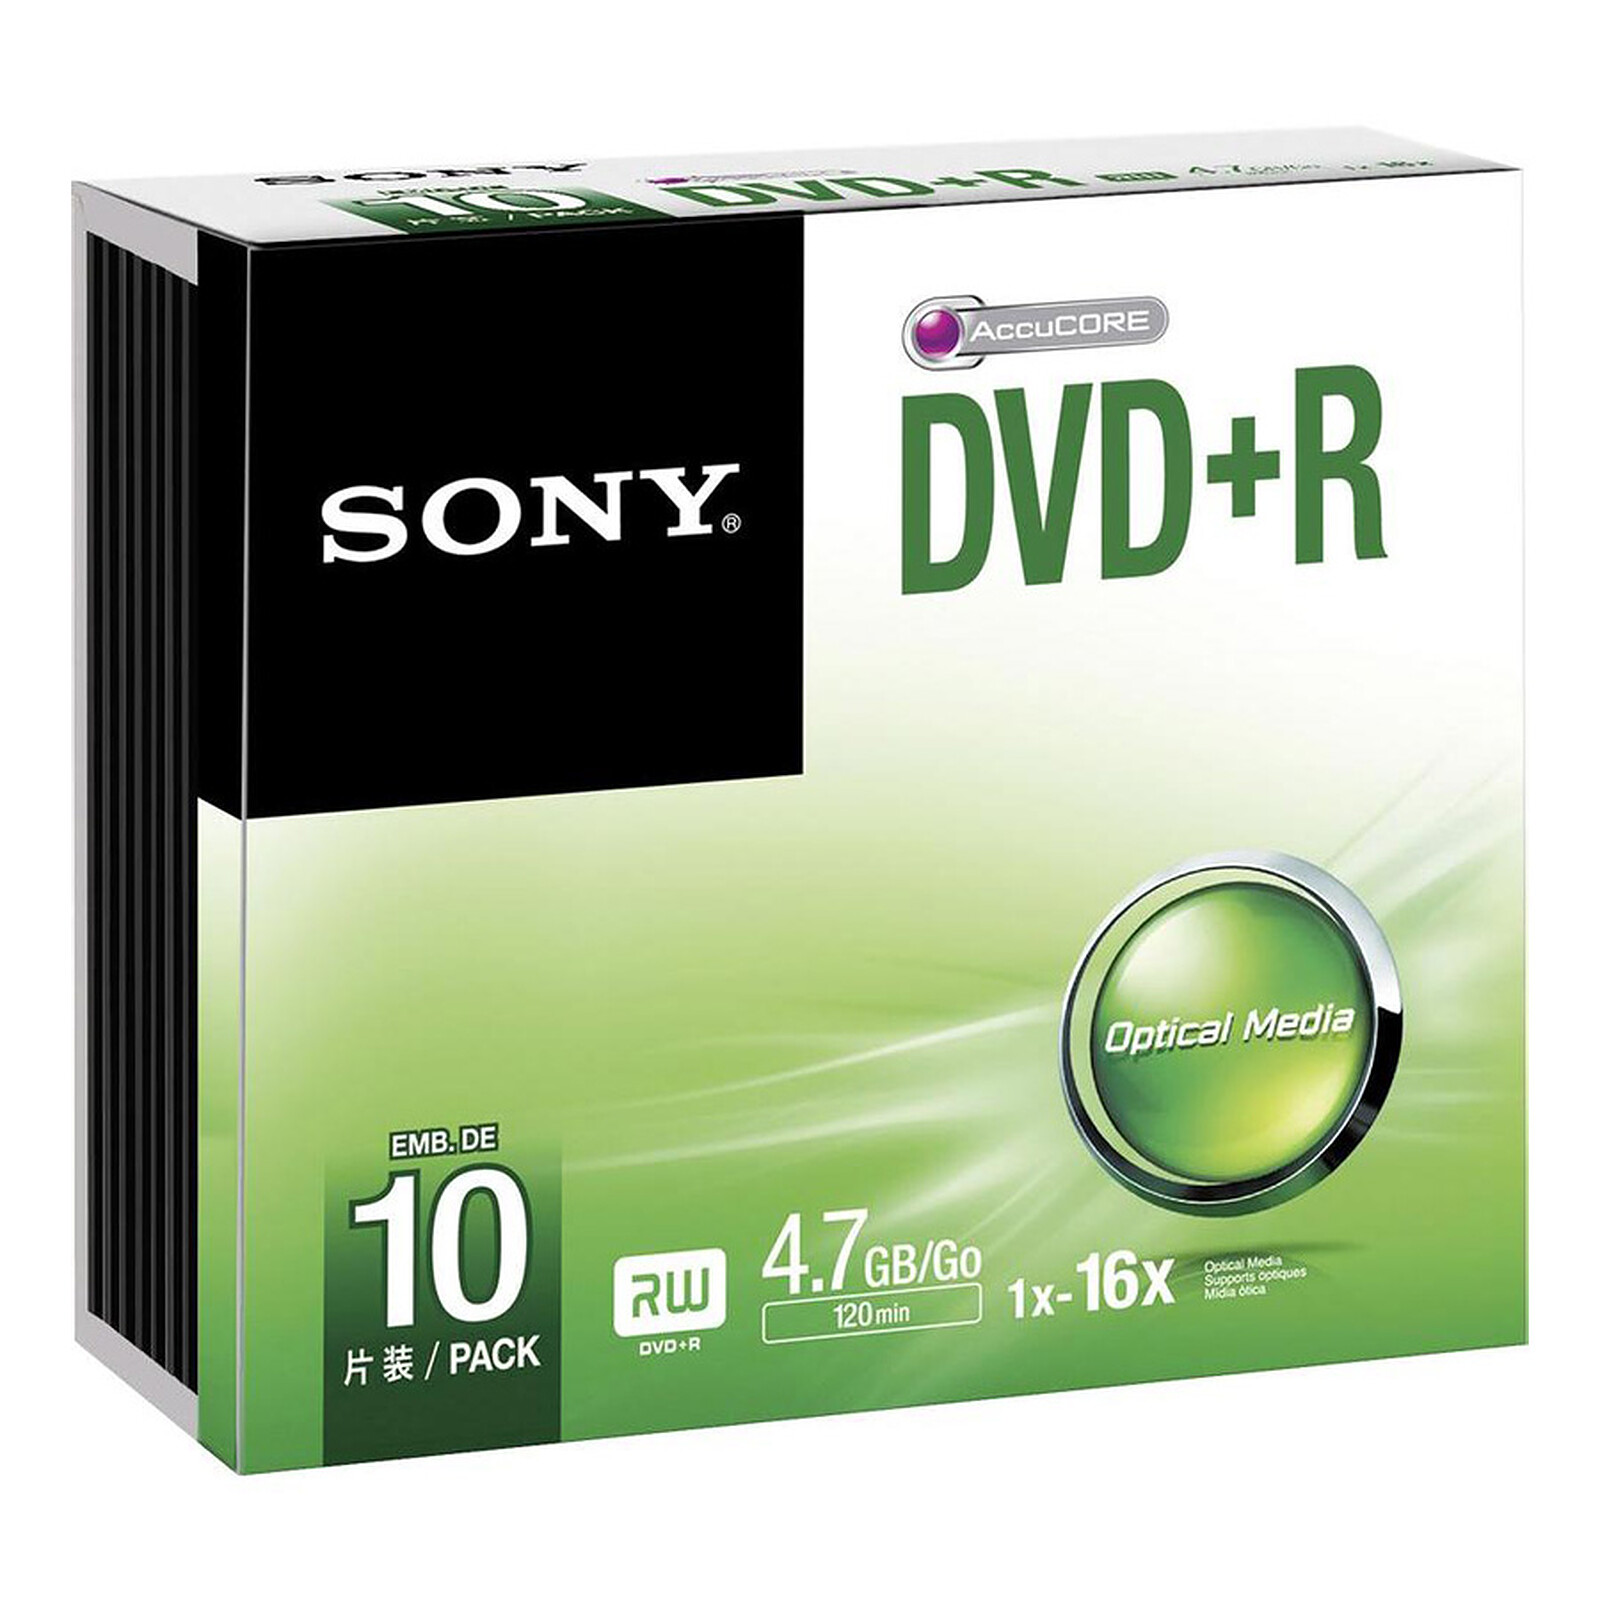 Sony Dvd R 4 7 Gb 16x Por 10 Caja Slim Dvd Sony En Ldlc Com